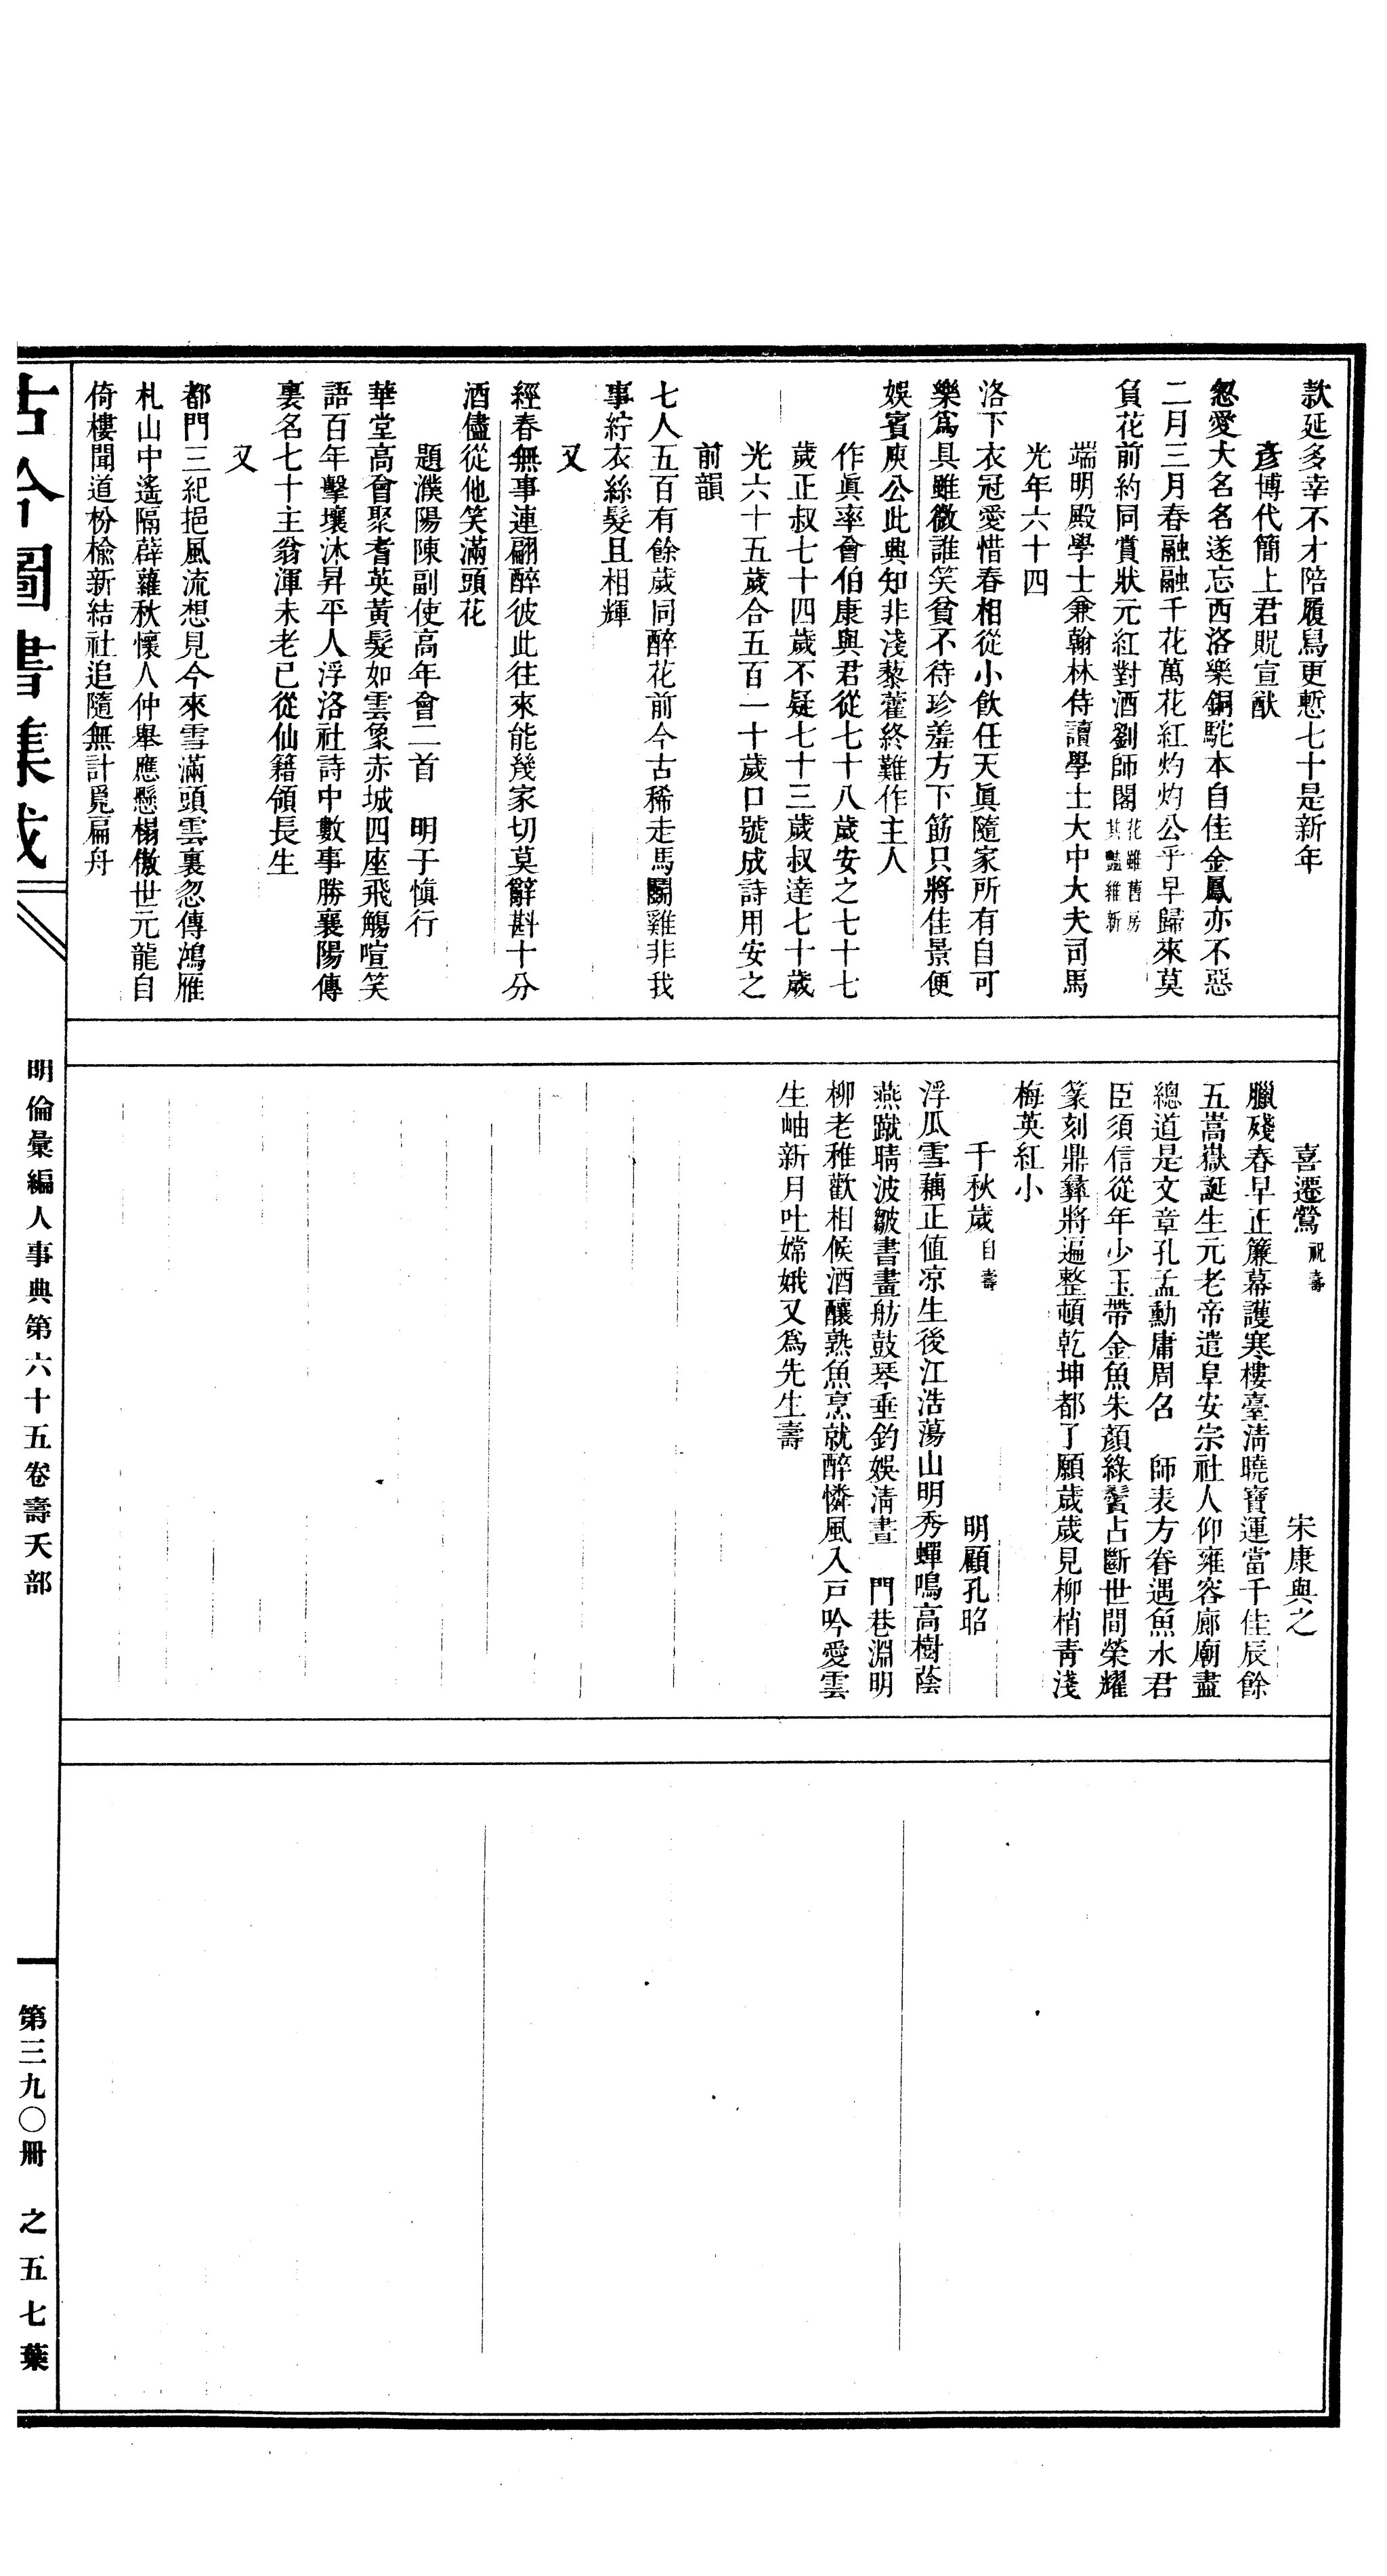 Page Gujin Tushu Jicheng Volume 390 1700 1725 Djvu 114 维基文库 自由的图书馆